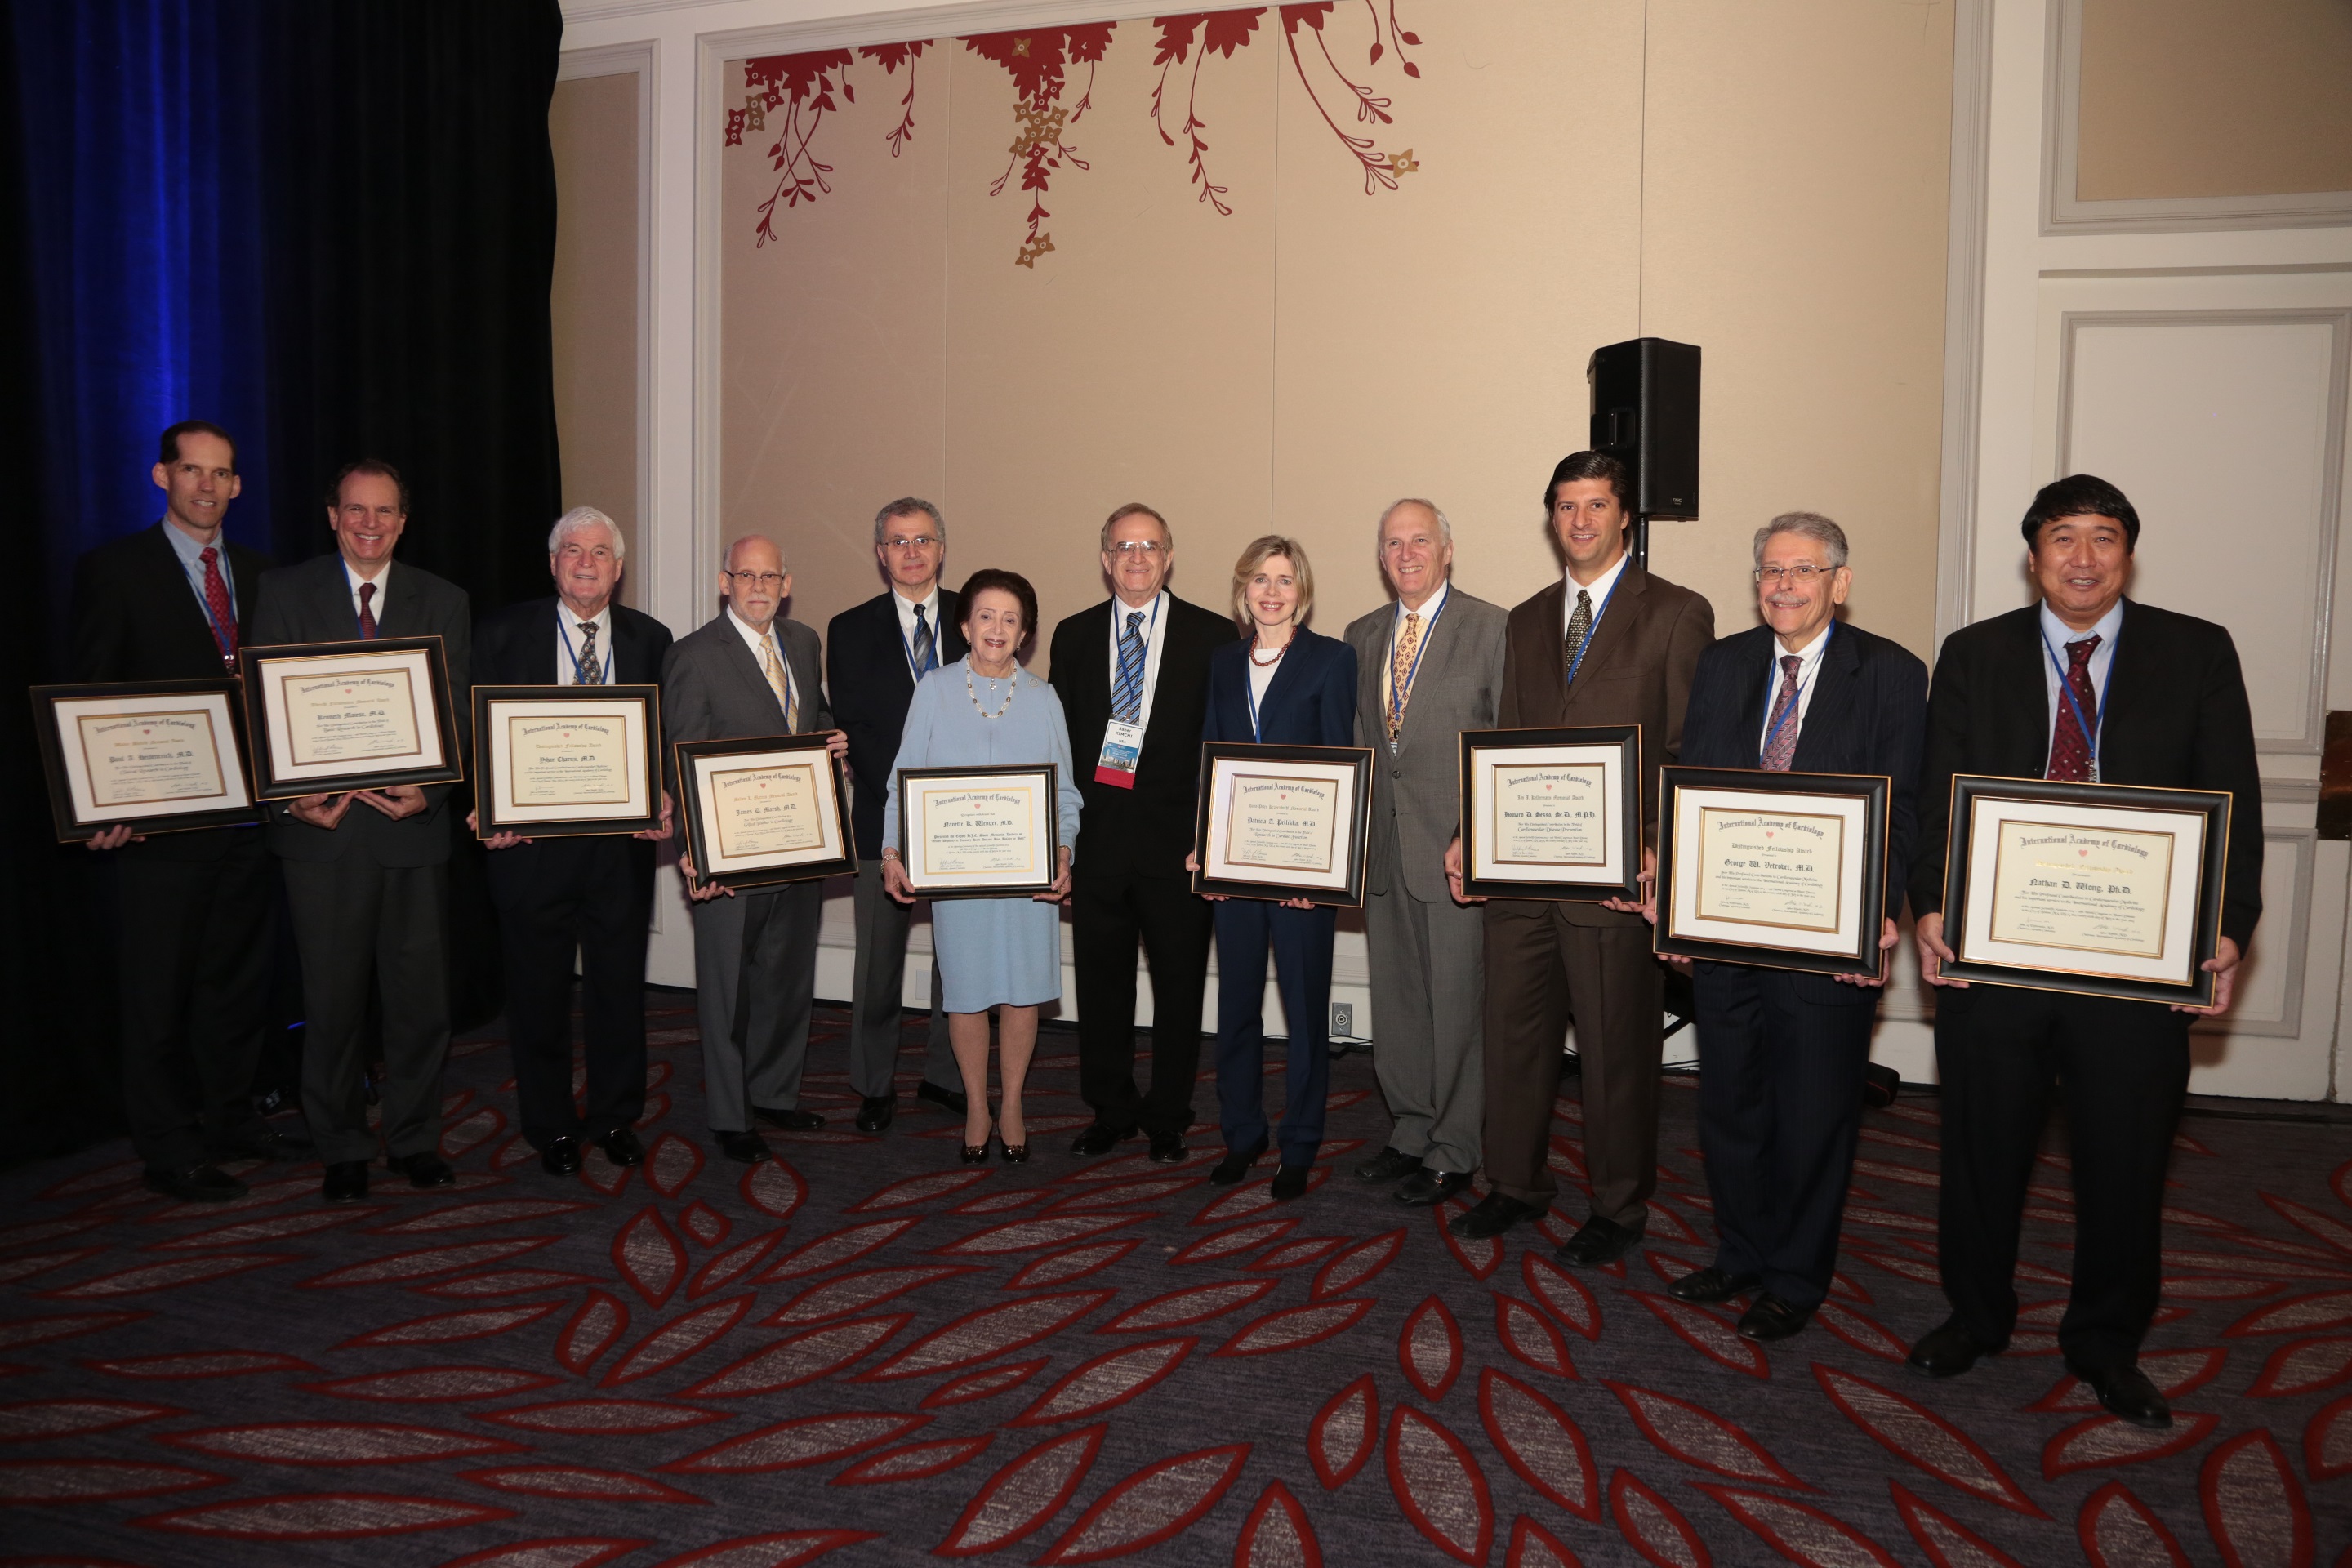 IAC 2014 Awardees (l to r) Dr. Heidenreich, Dr. Maiese, Dr. Charuzi, Dr. Marsh, Dr. Wenger, Dr. Kimchi (Founder), Dr. Pellikka, Dr. Borer, Dr. Sesso, Dr. Vetrovec, Dr. Wong, & (not pictured) Dr. Mehta